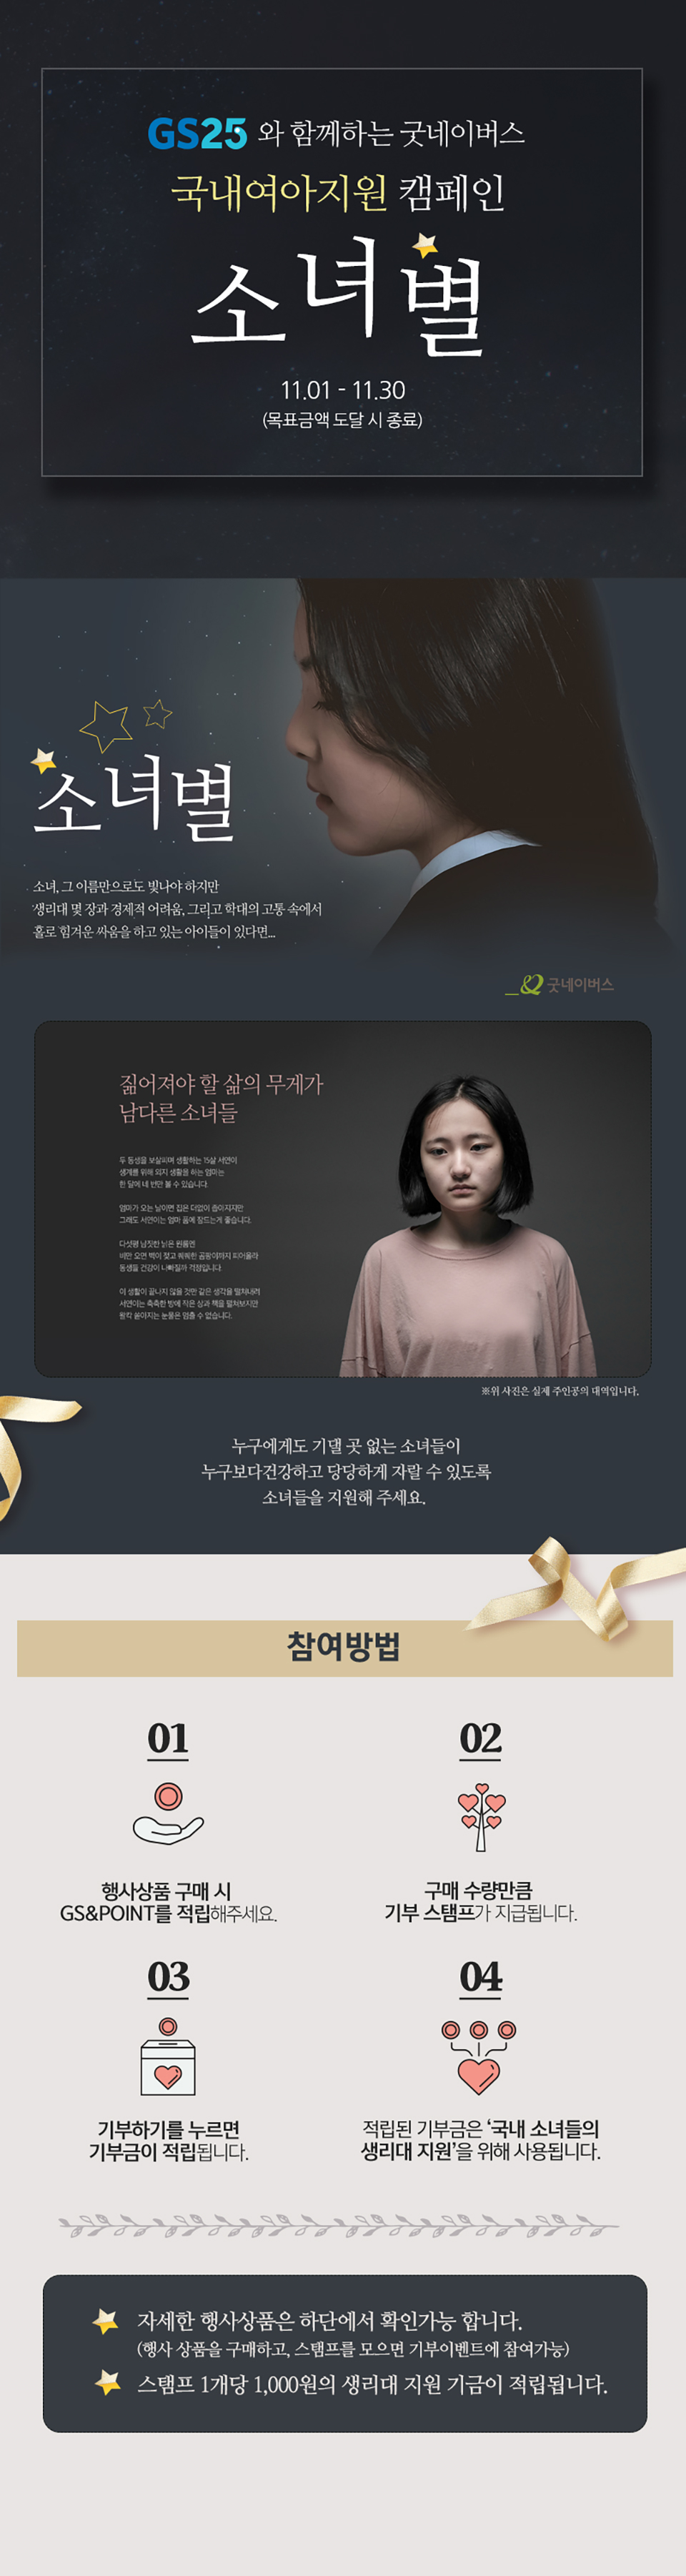 GS25와 함께하는 굿네이버스 국내여아지원 캠페인 소녀별 - 하단 상세 설명